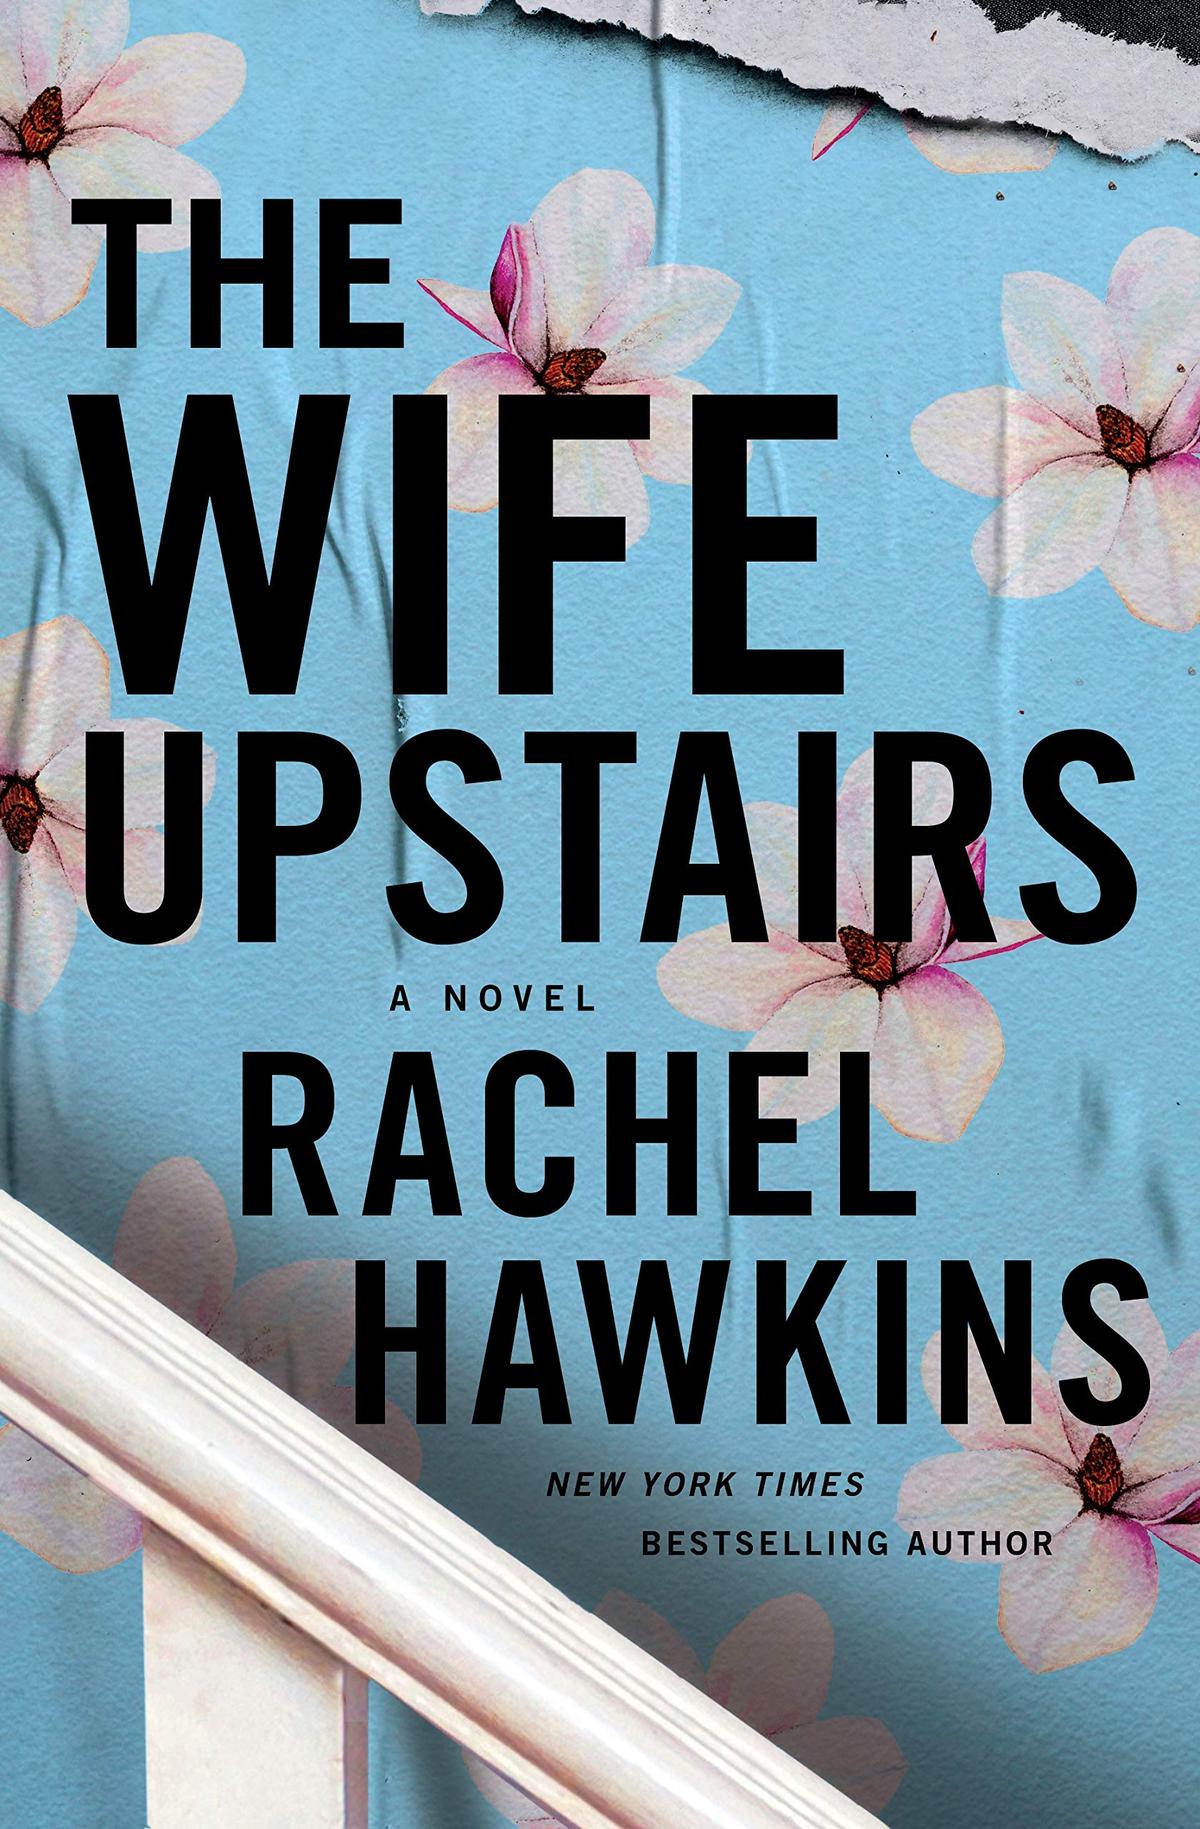 the wife upstairs rachel hawkins